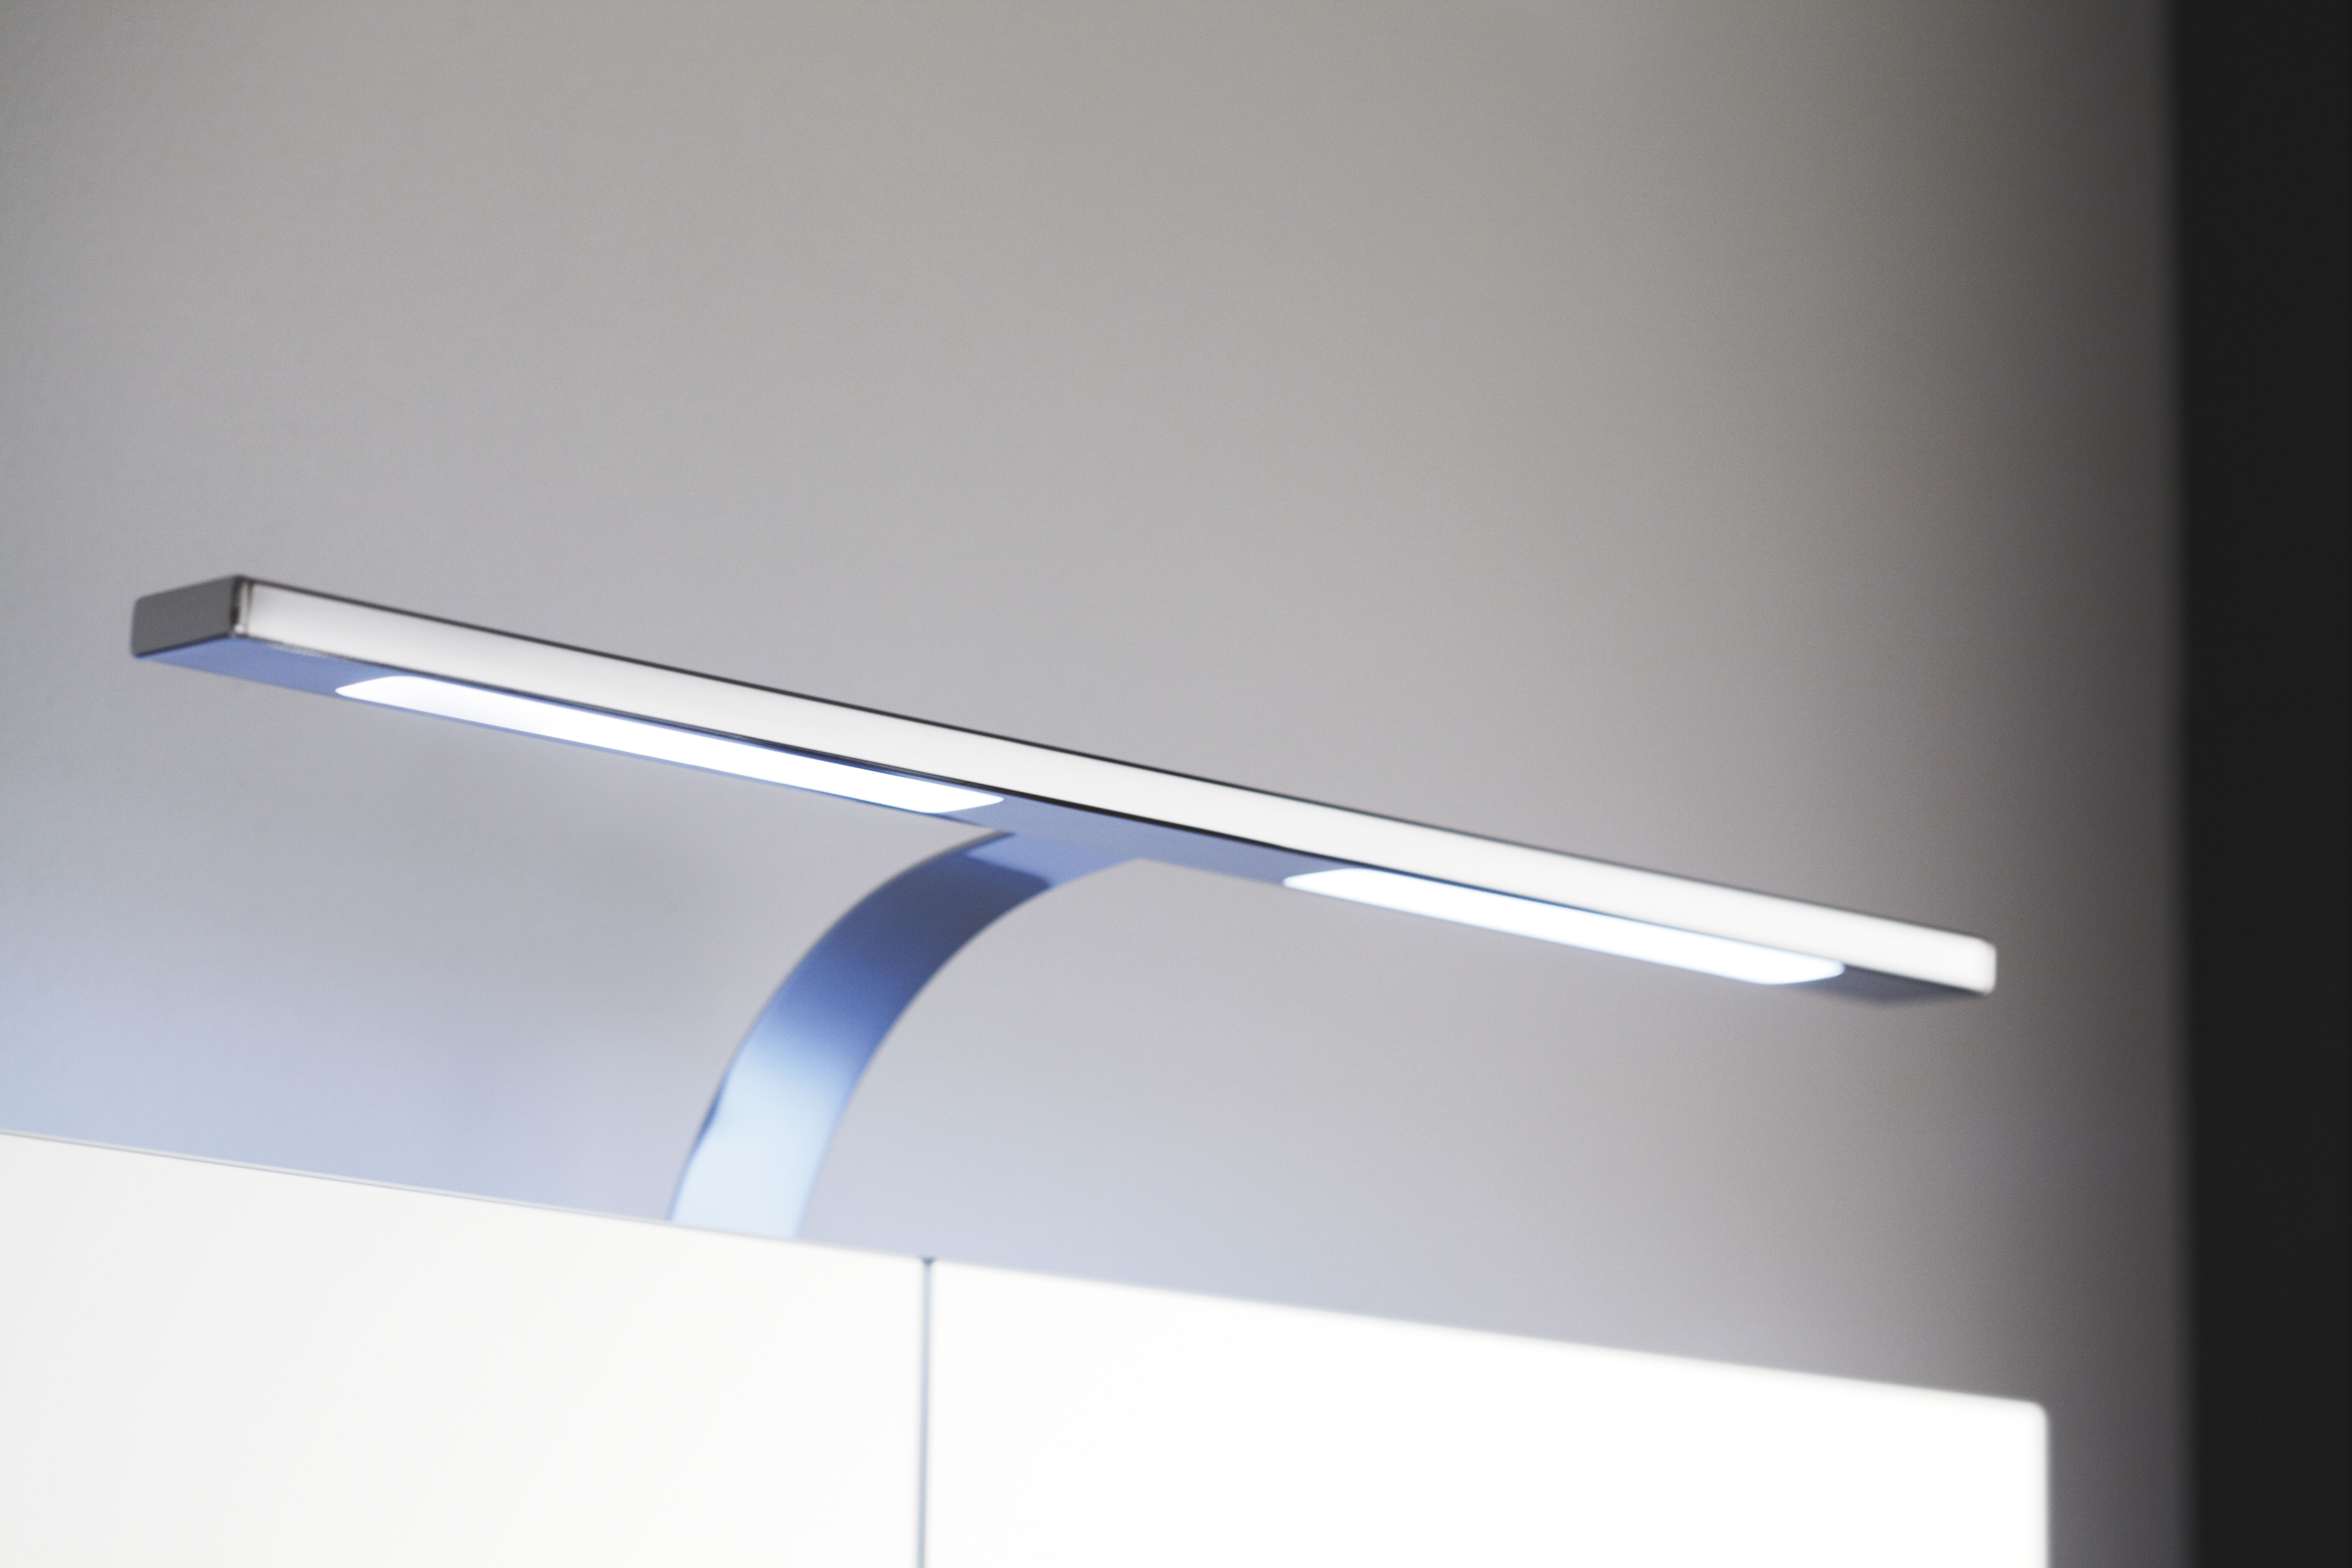 HSK Spiegelschrank aus Aluminium „ASP 300 LED“ 3-türig 105 × 75 × 17 cm 